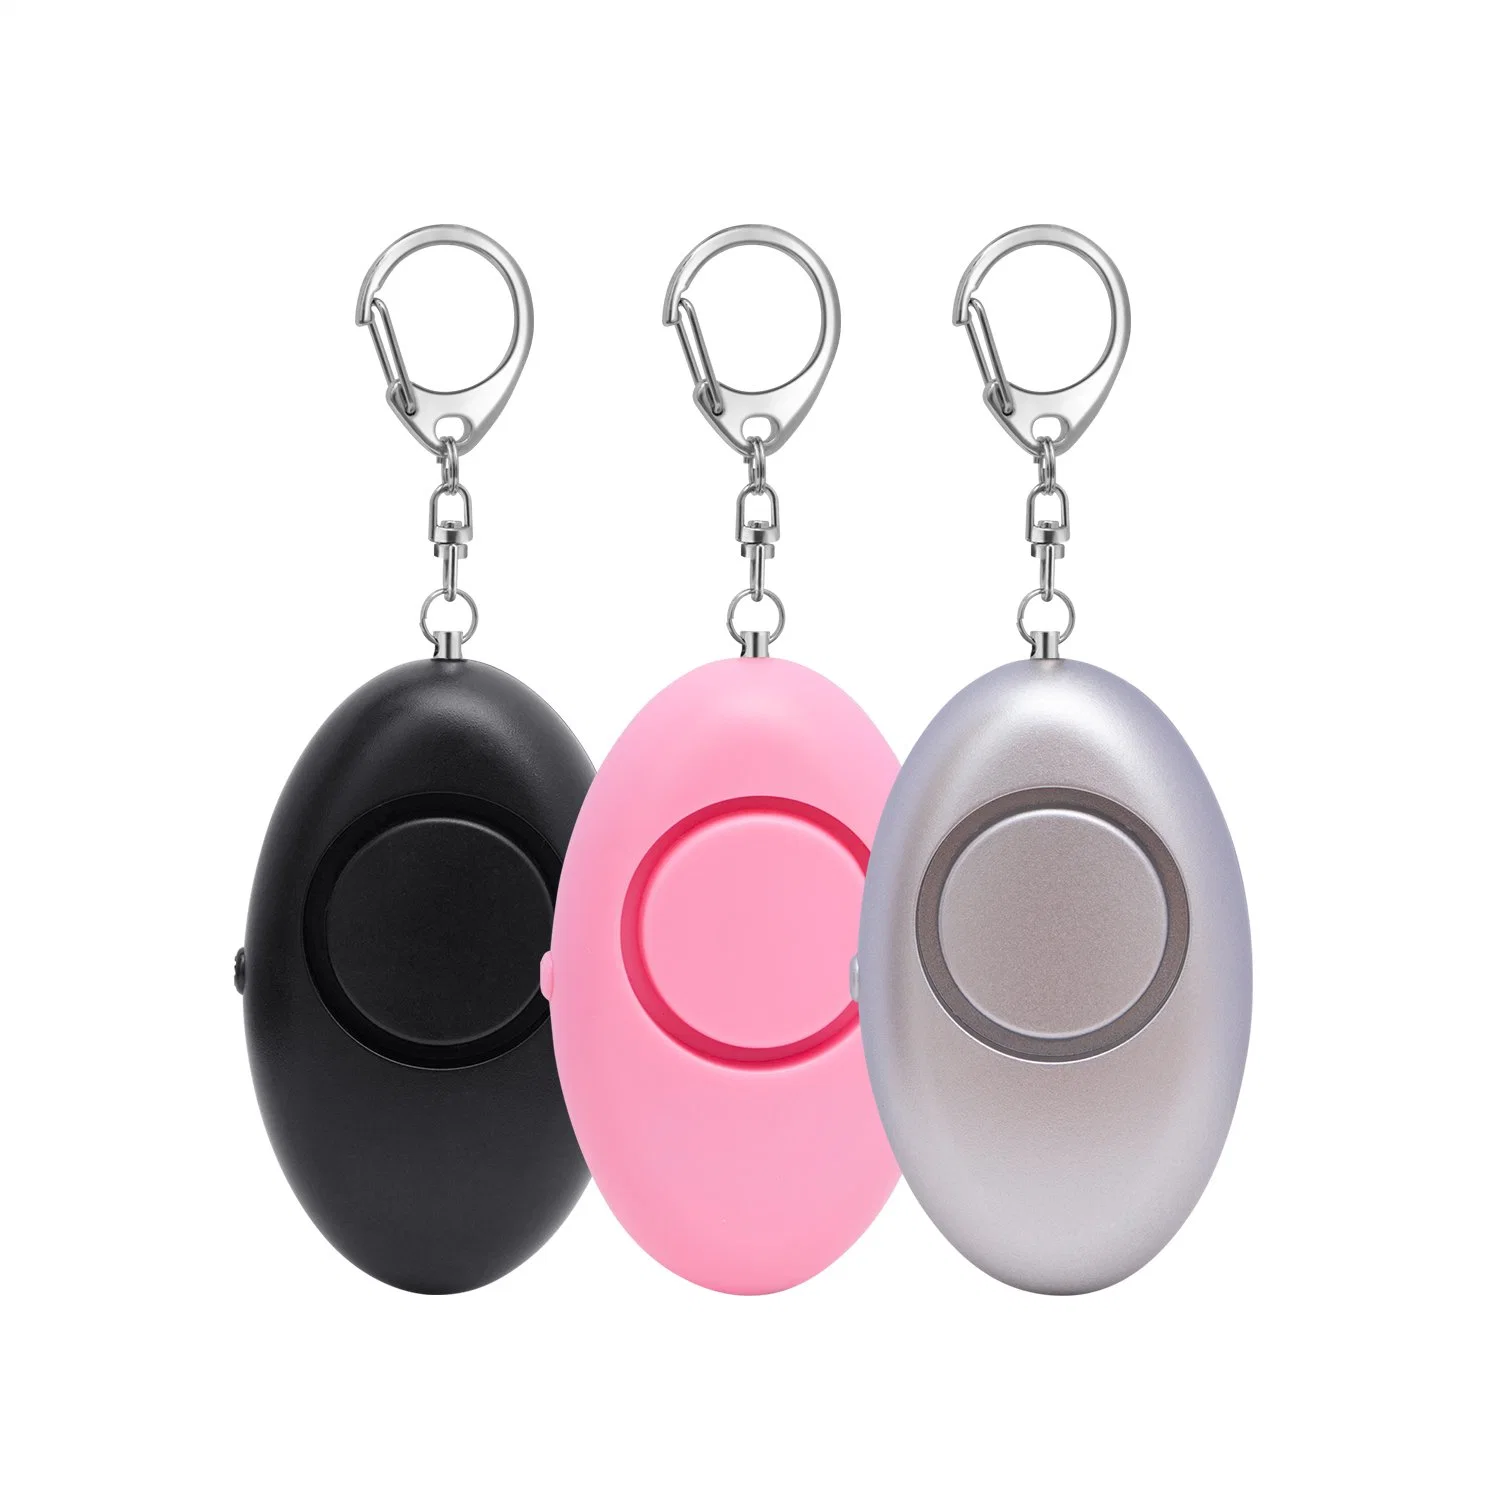 Oval Shape Personal Alarm 130dB Keychain Safety Alarm for Women